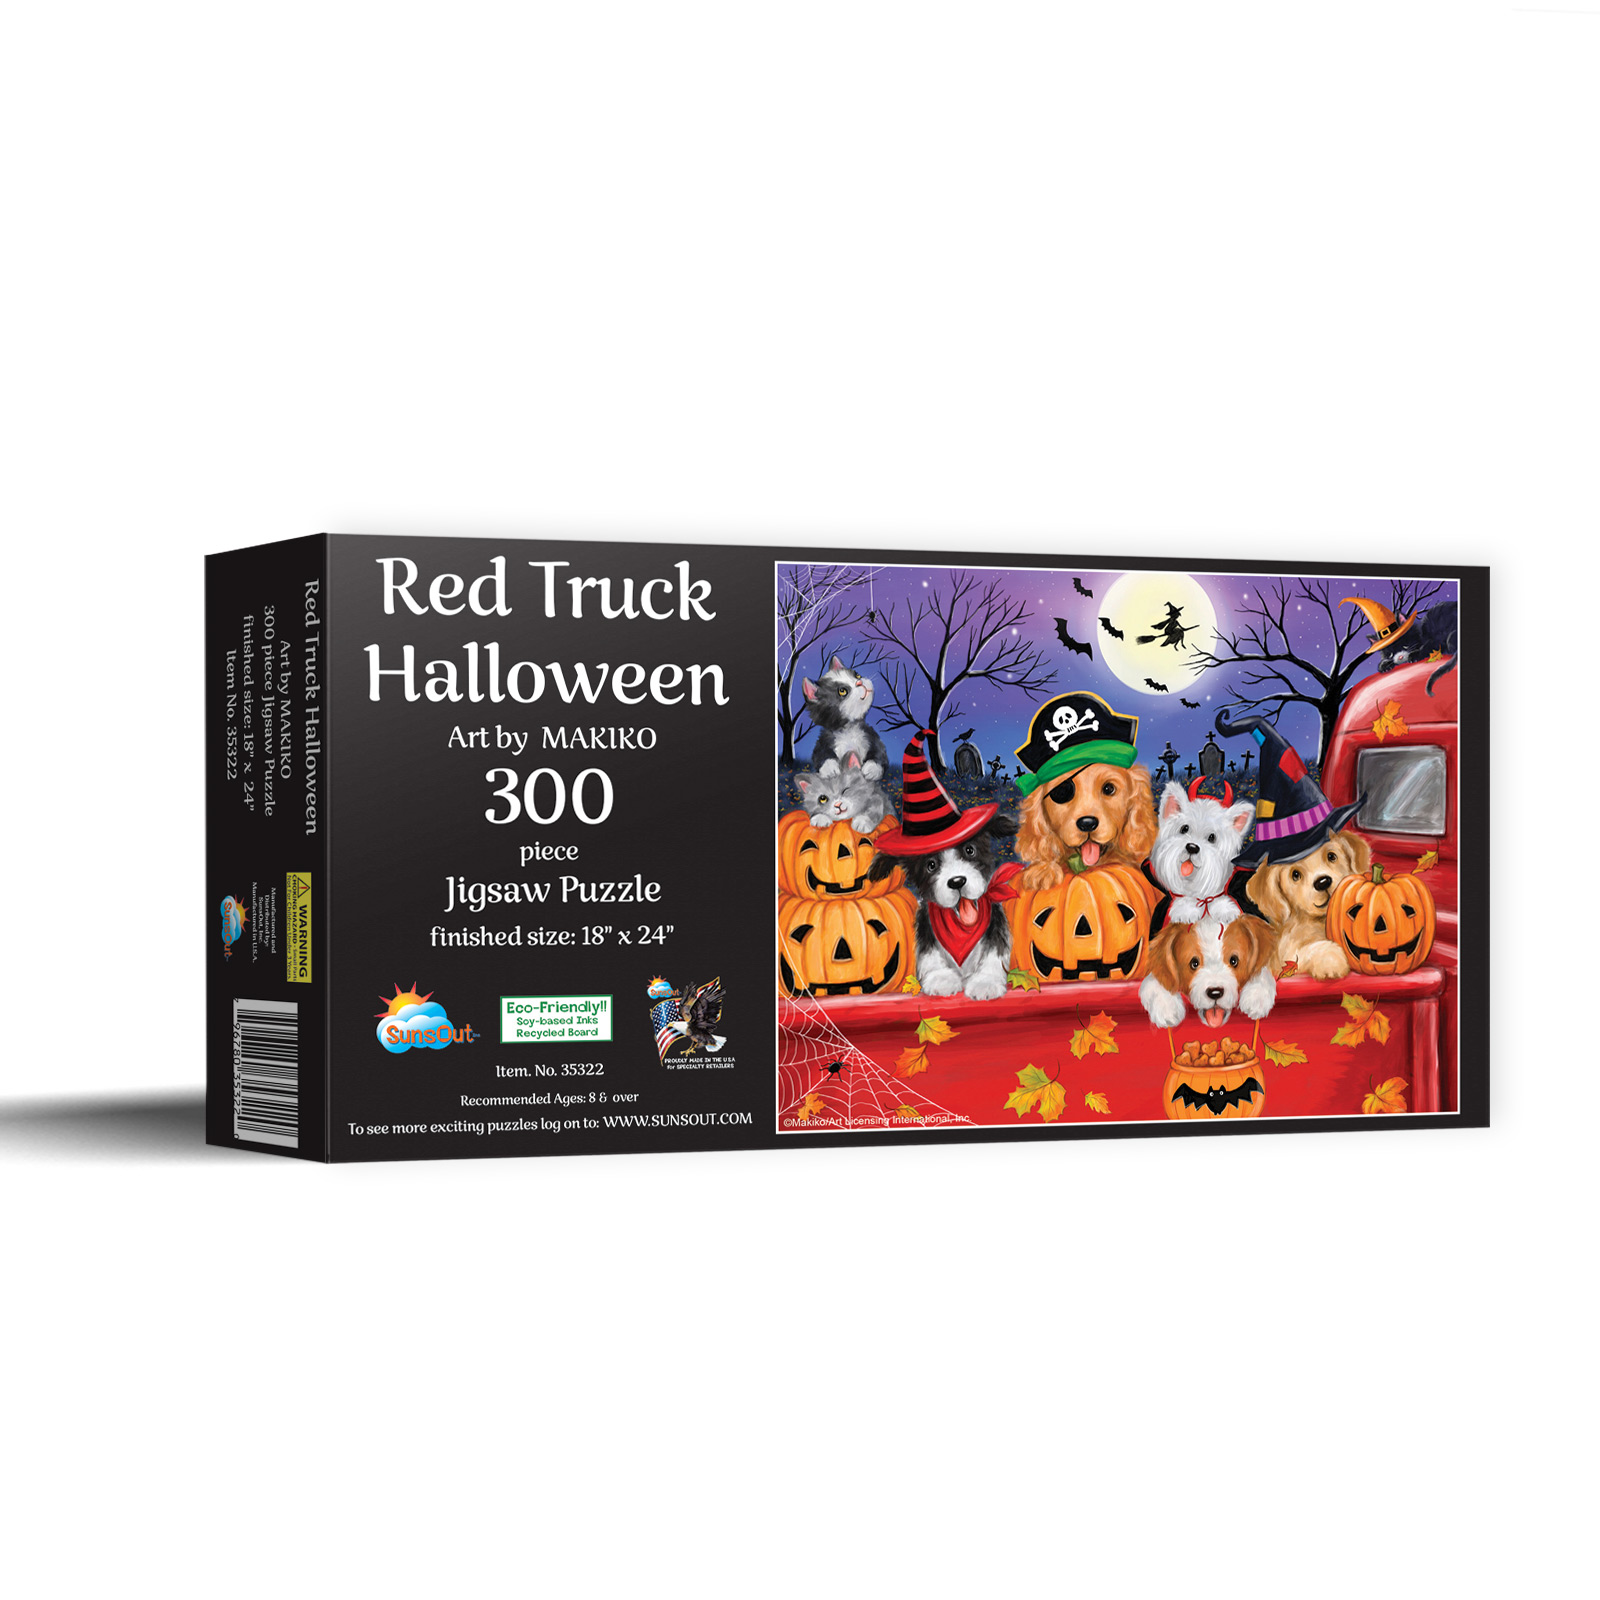 Red Truck Halloween